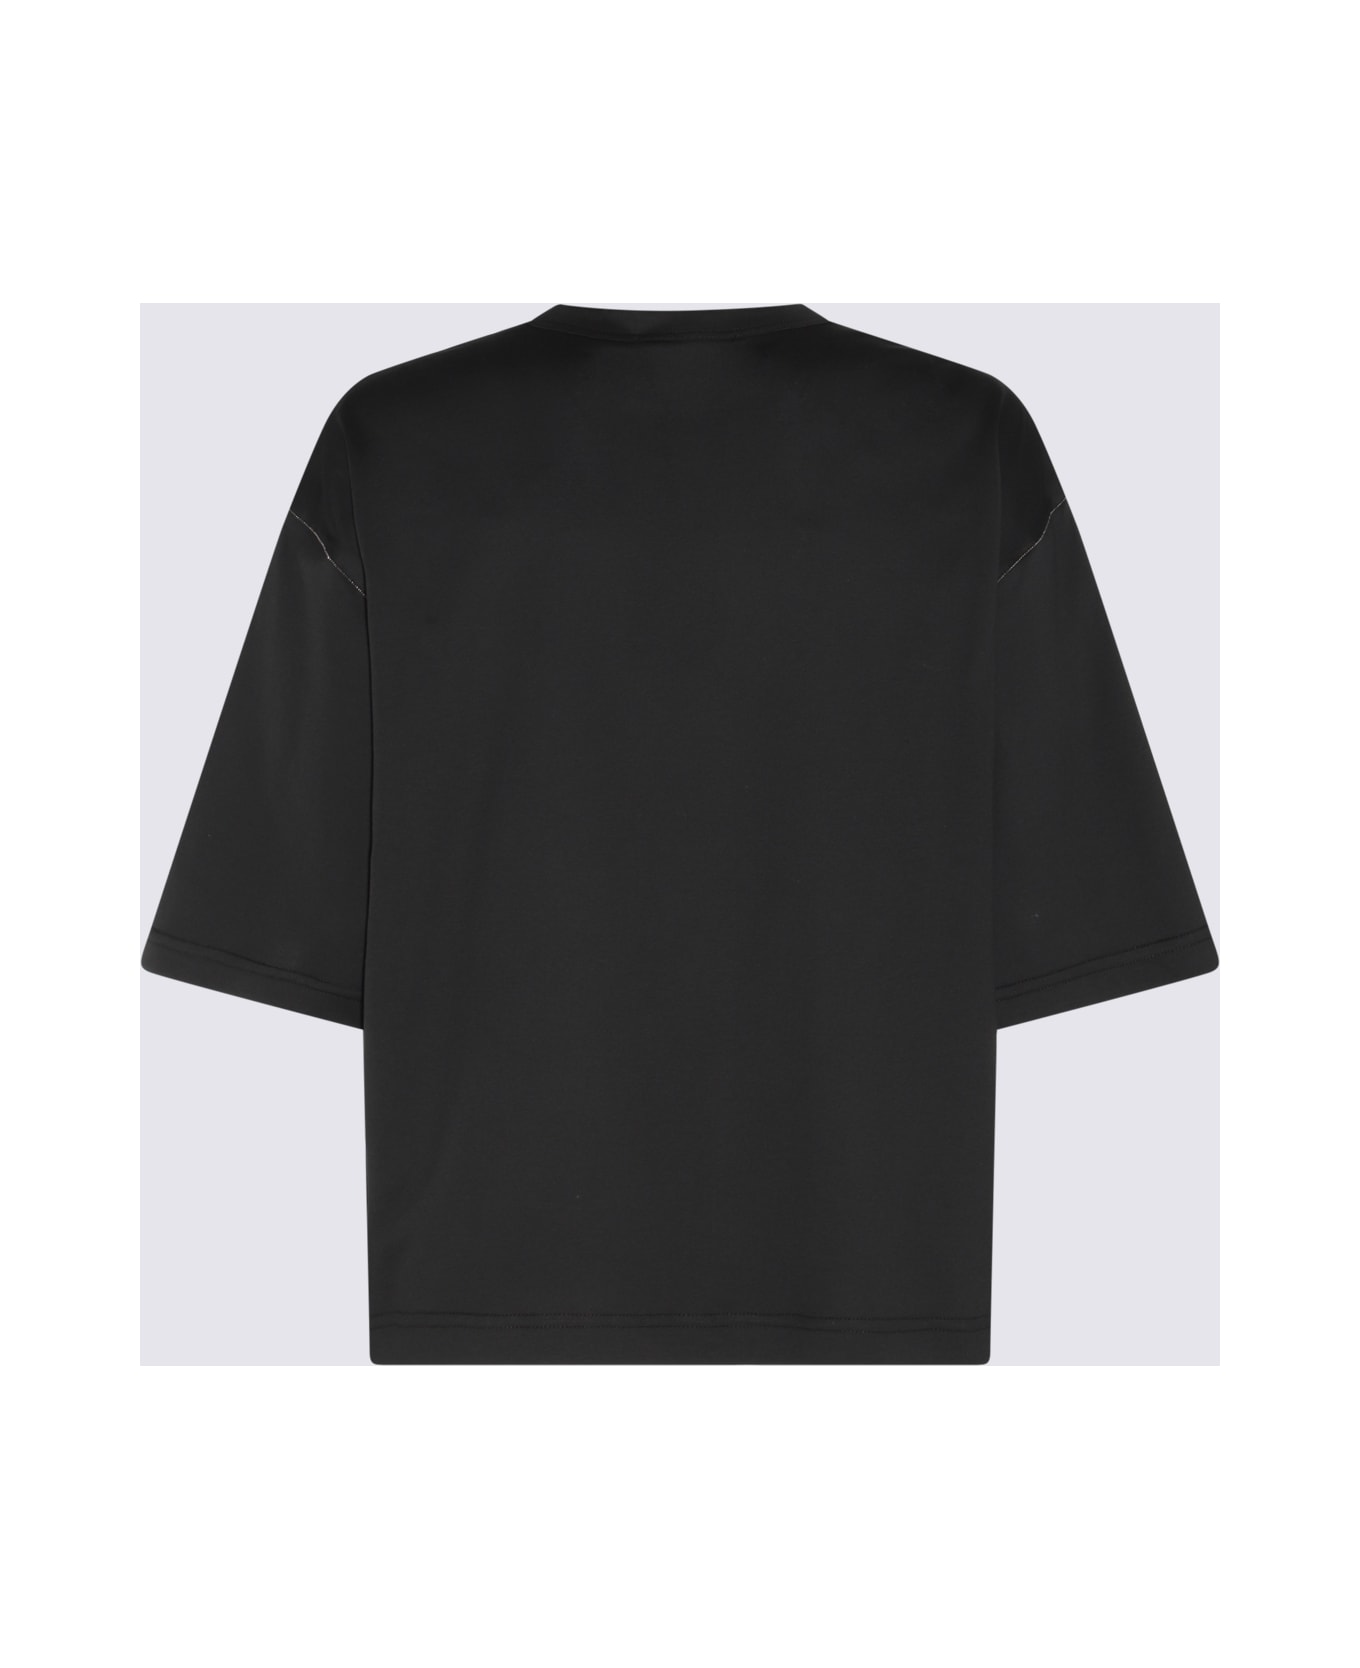 Fabiana Filippi Black Cotton T-shirt - Black